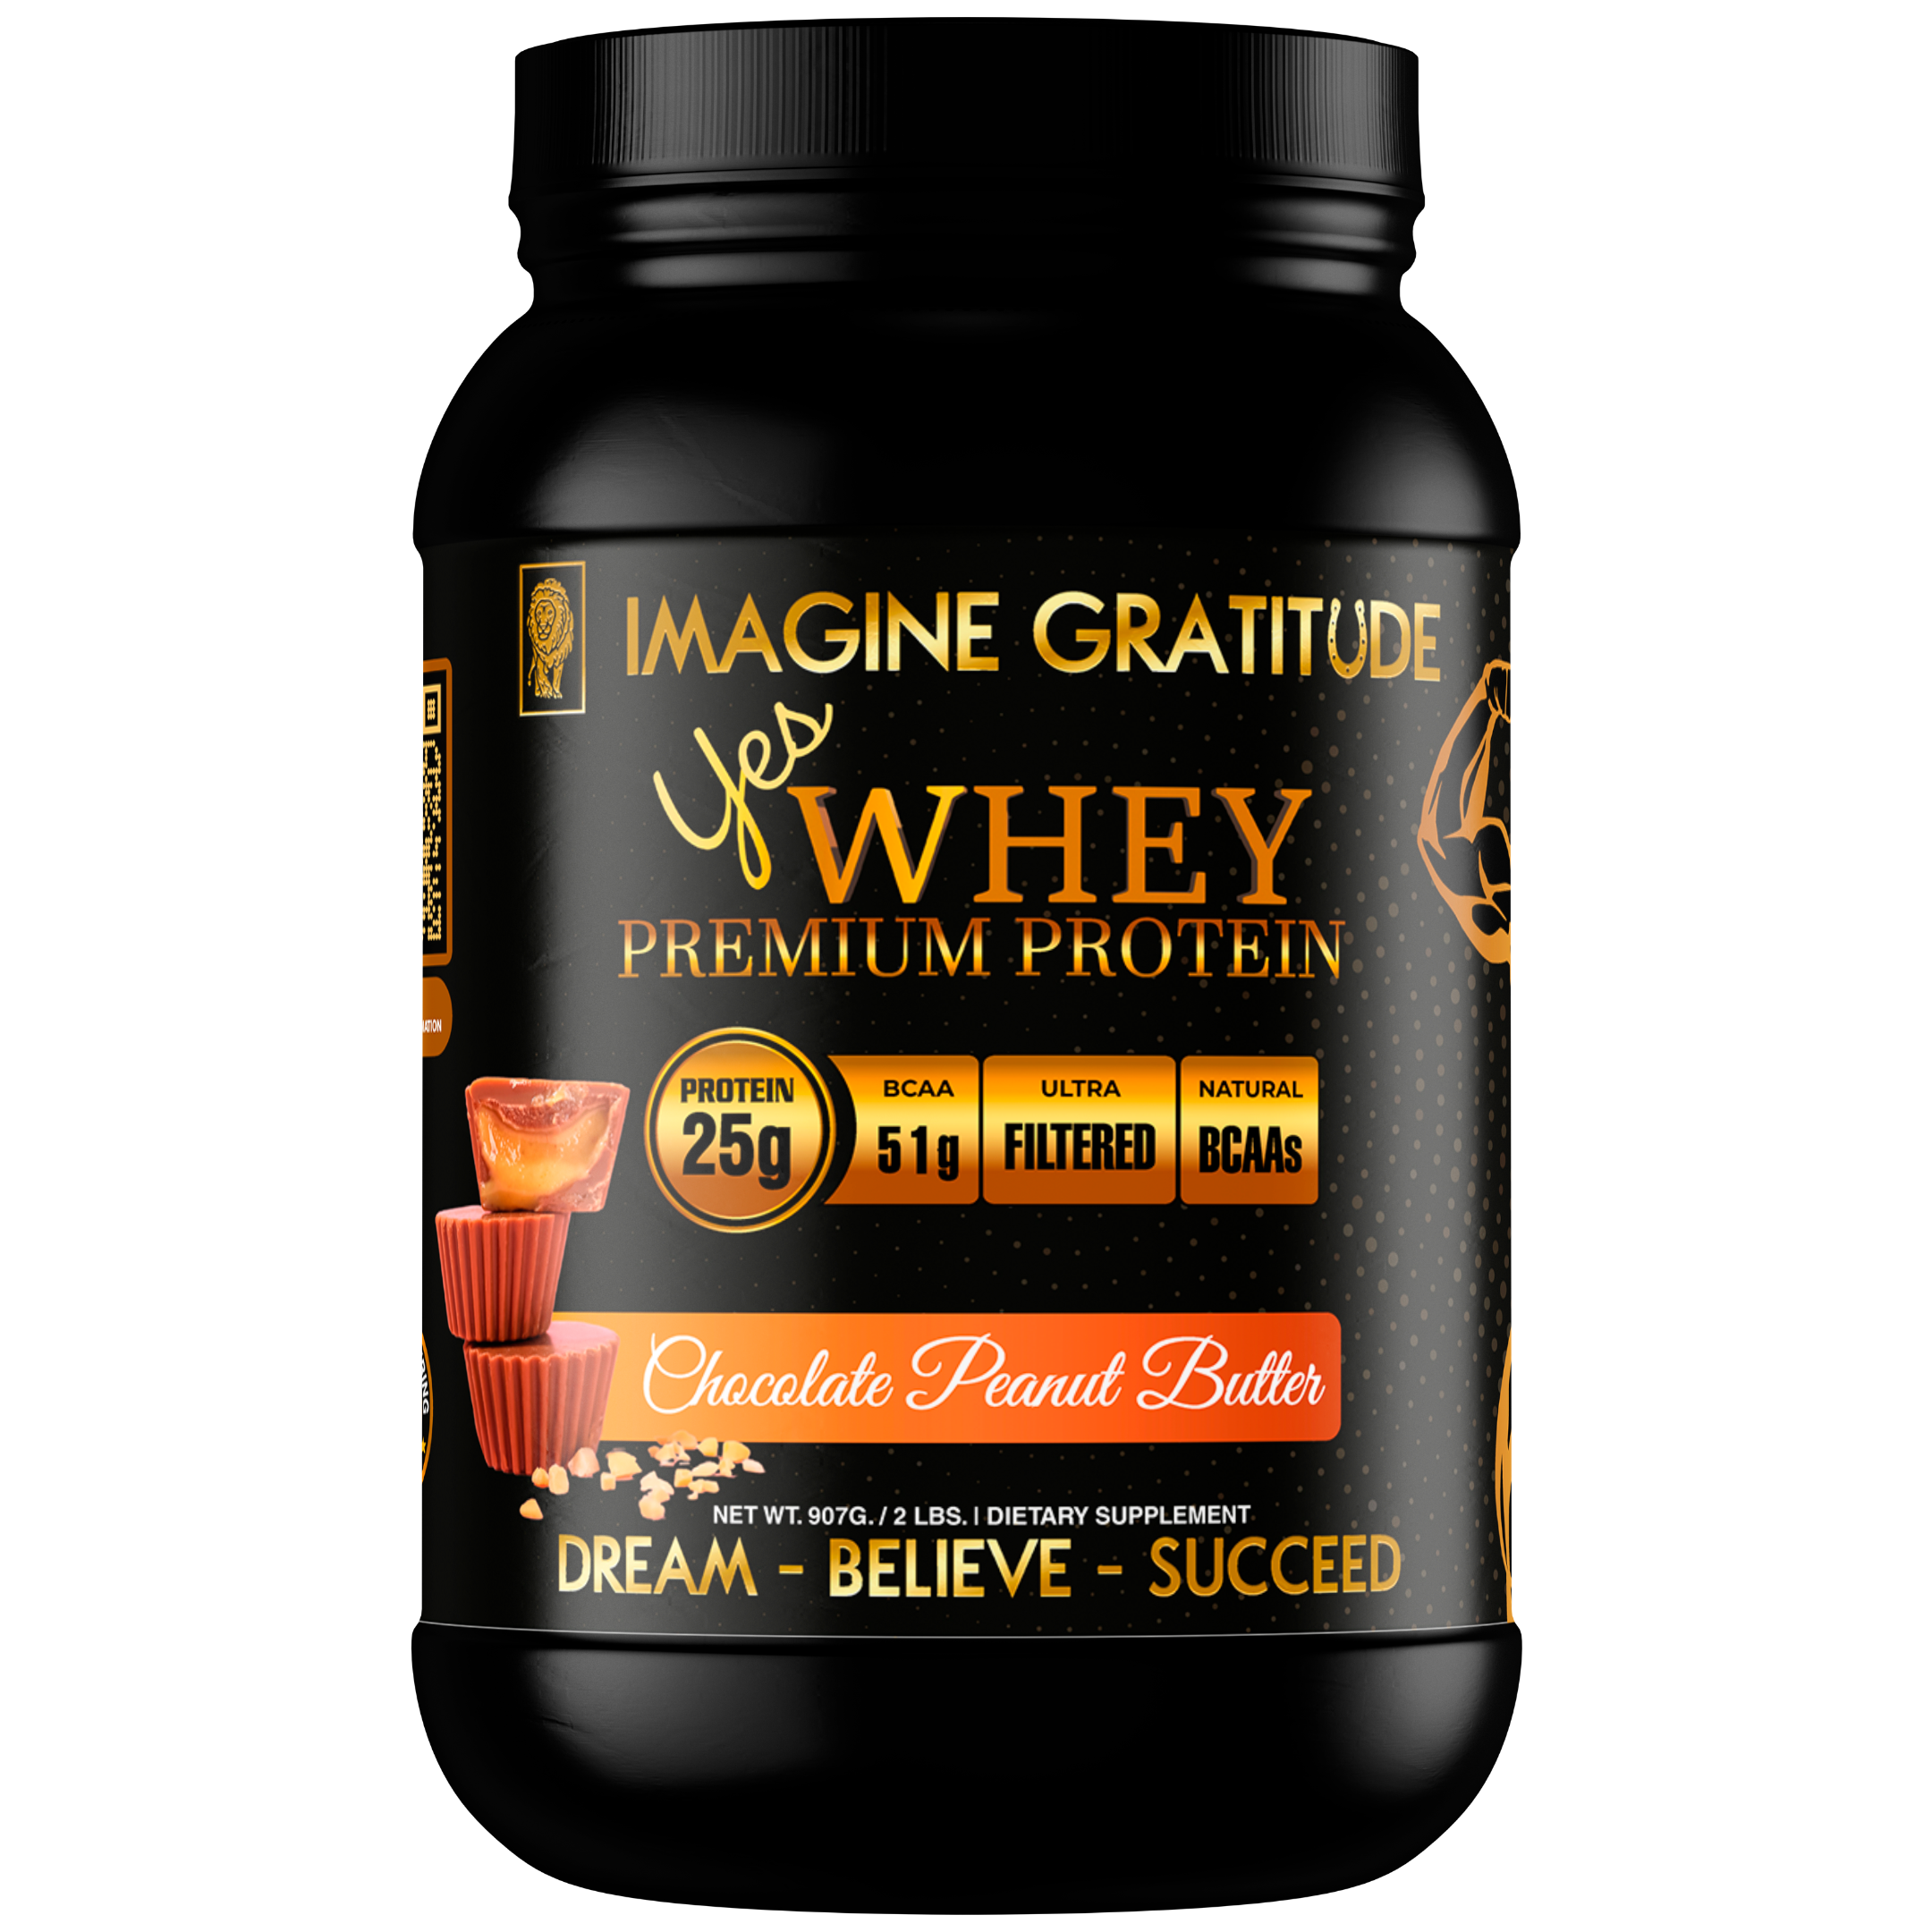 'Yes Whey' Premium Protein 2Lbs.